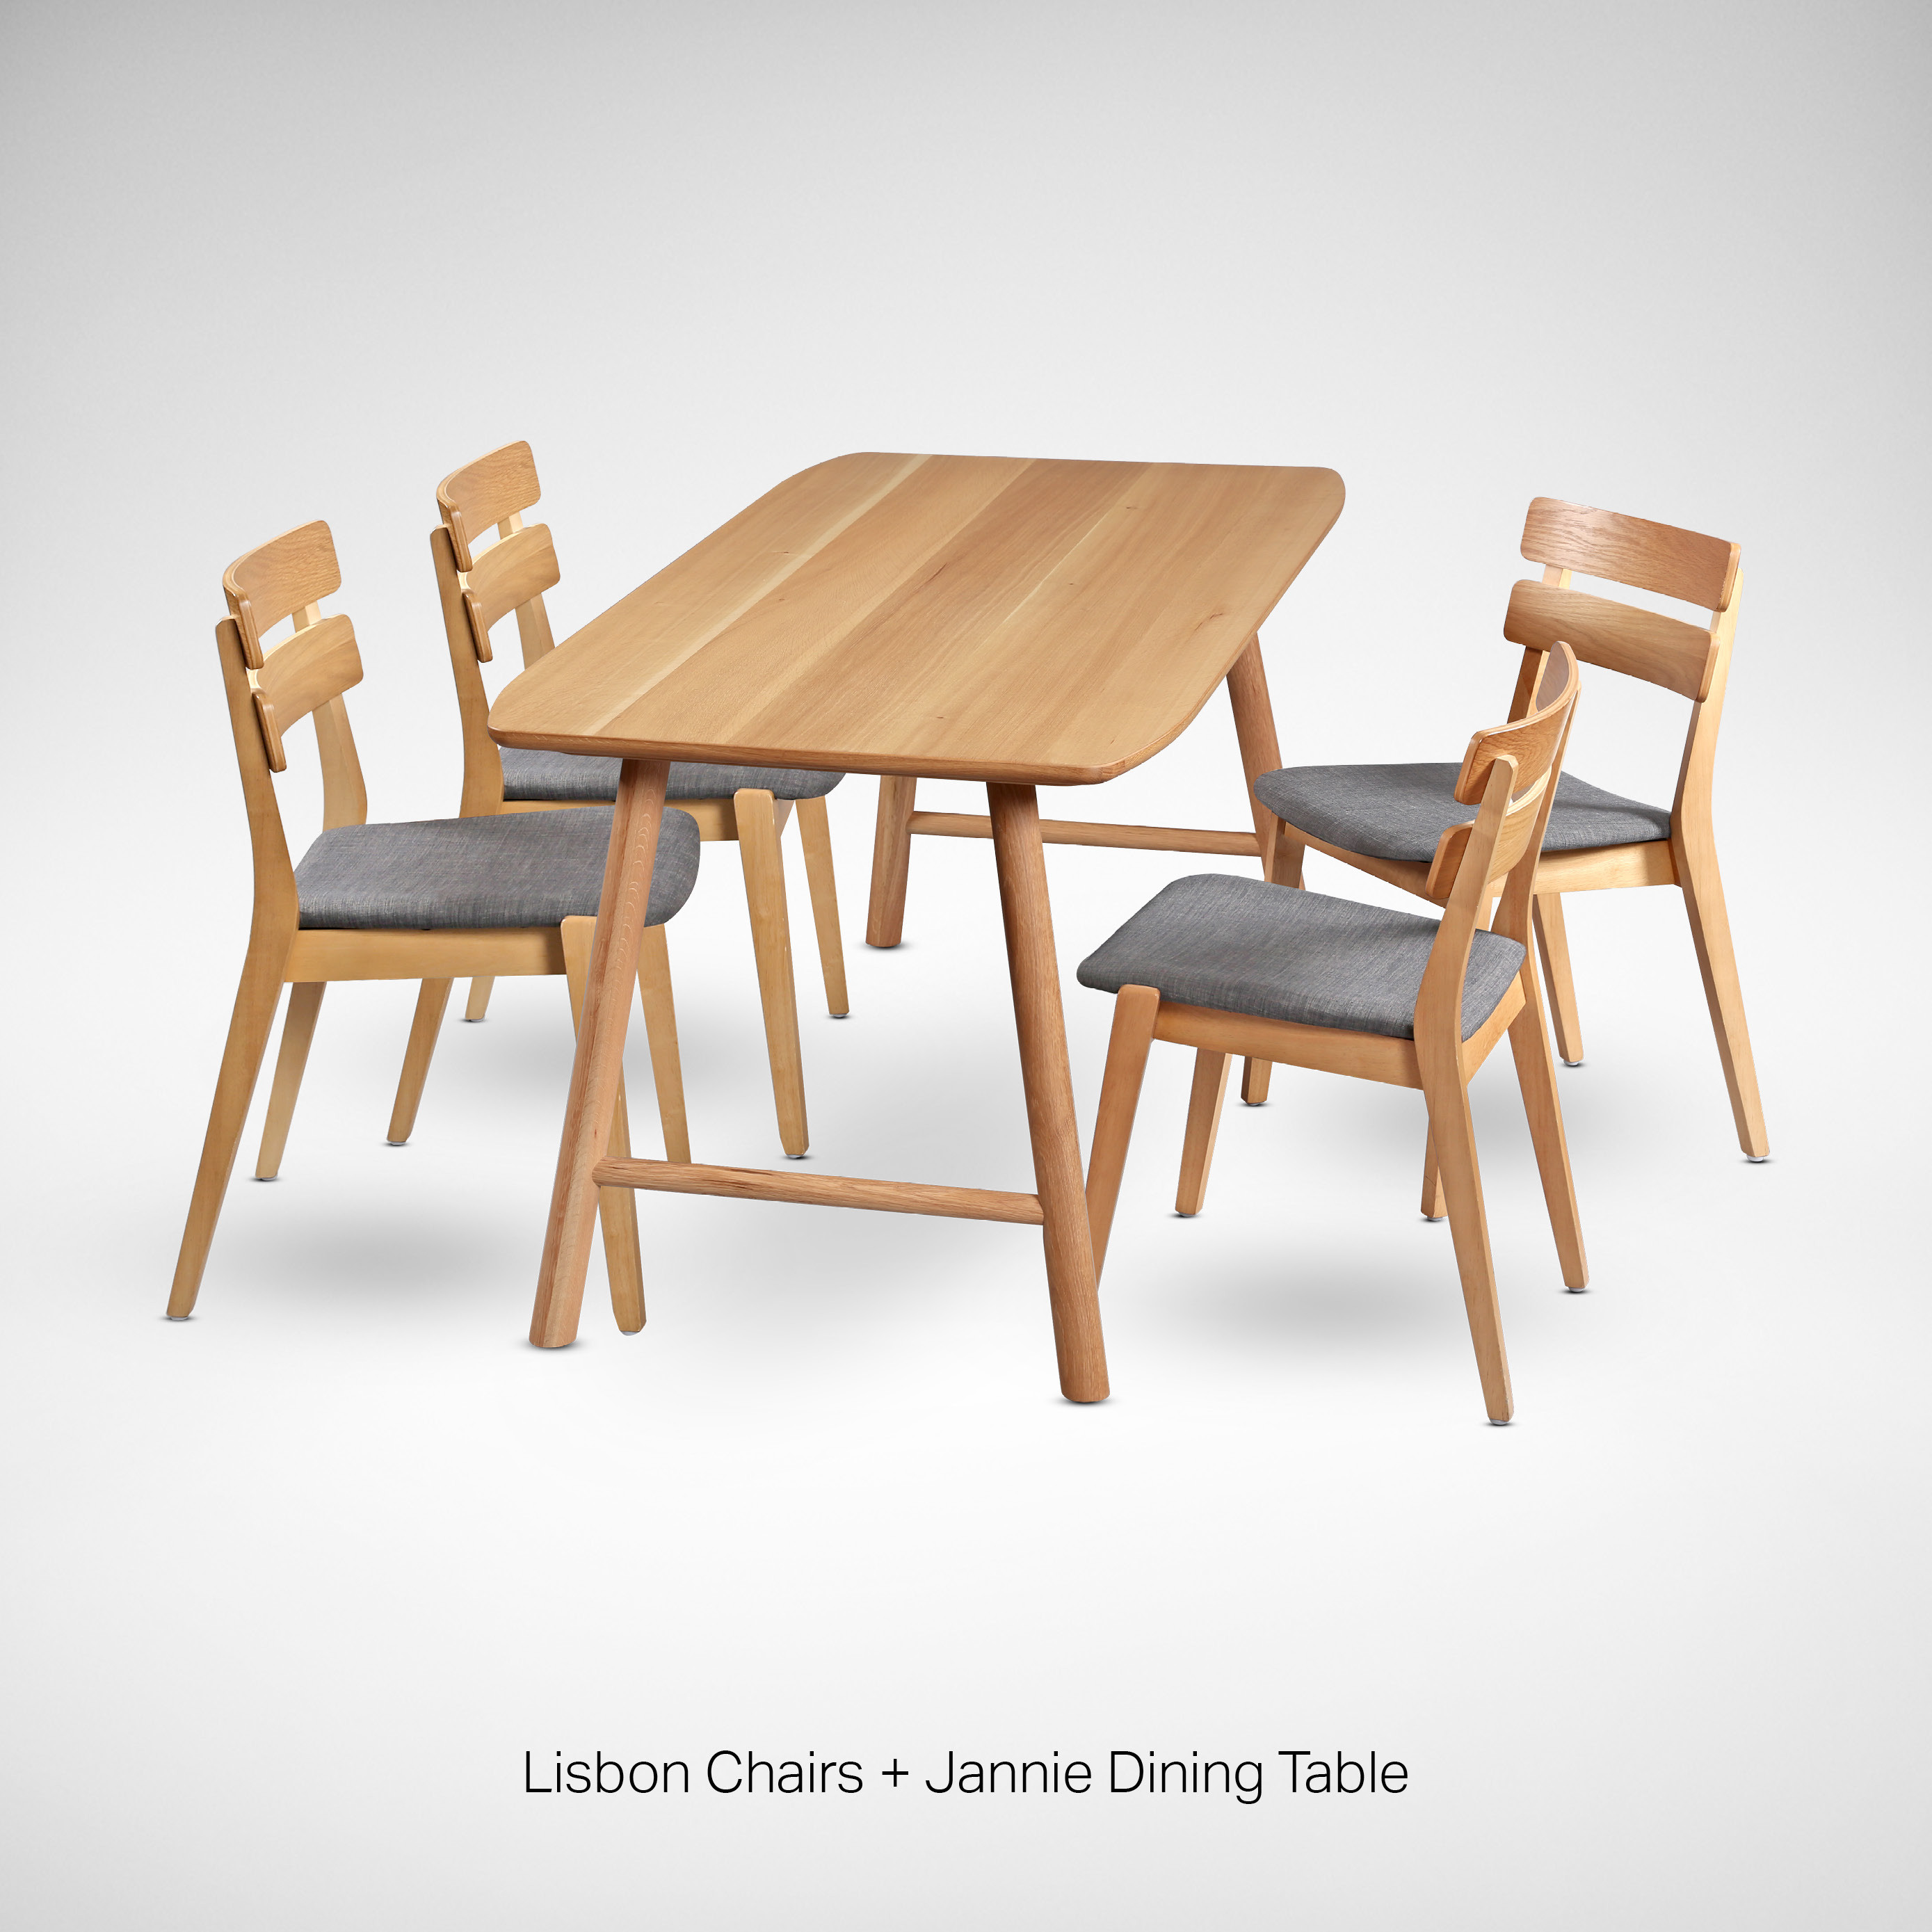 hardwood flooring bundle size of jannie dining table oak wood bundle 3 comfort design the in jannie dining table oak wood bundle 3